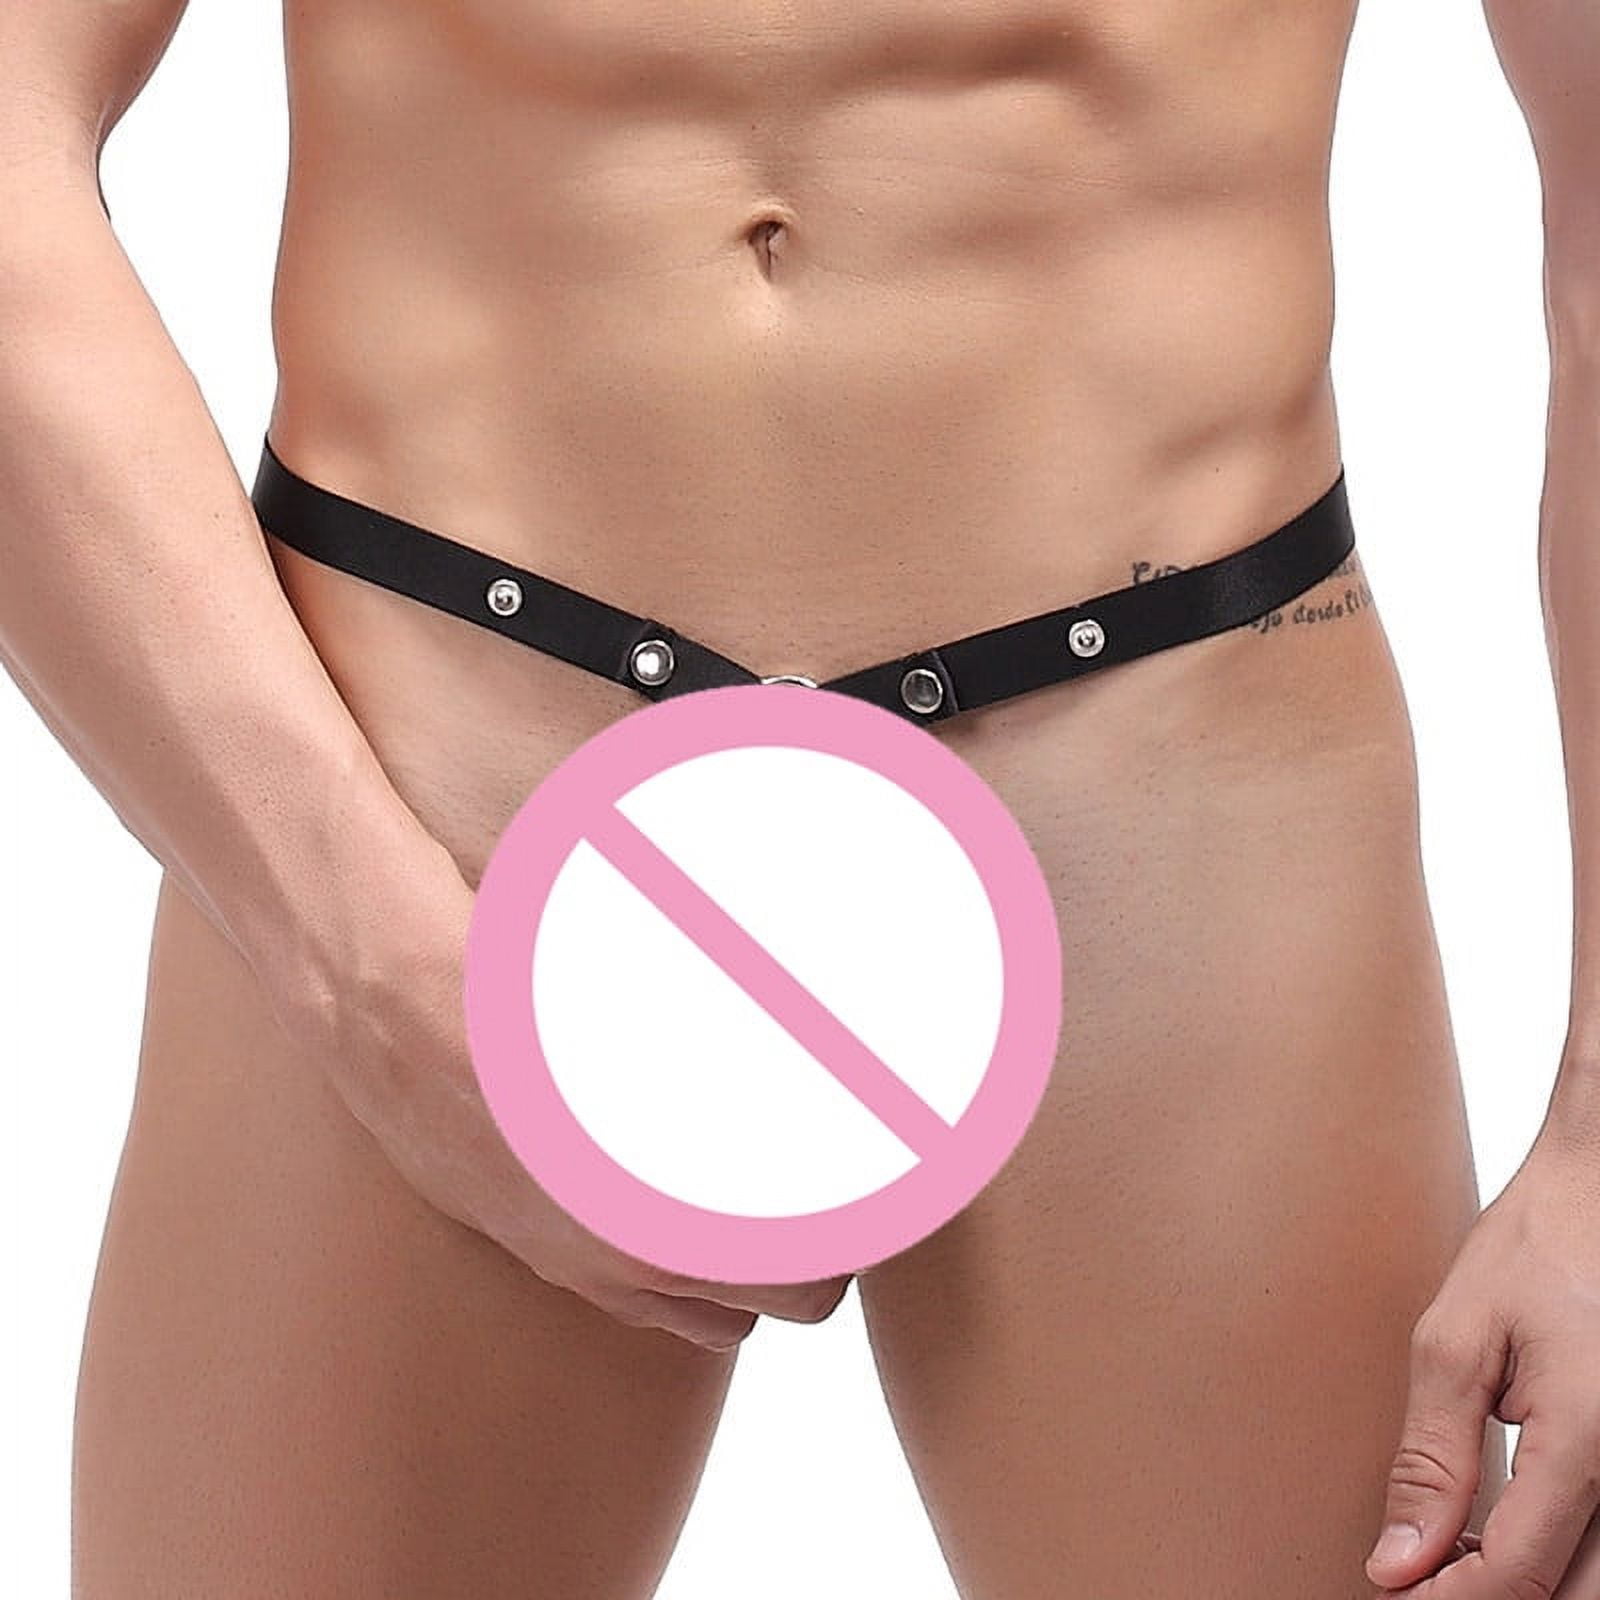 SEXY MENS HEALTHY Male Bulge Enhancer Ball Lifter Underwear C